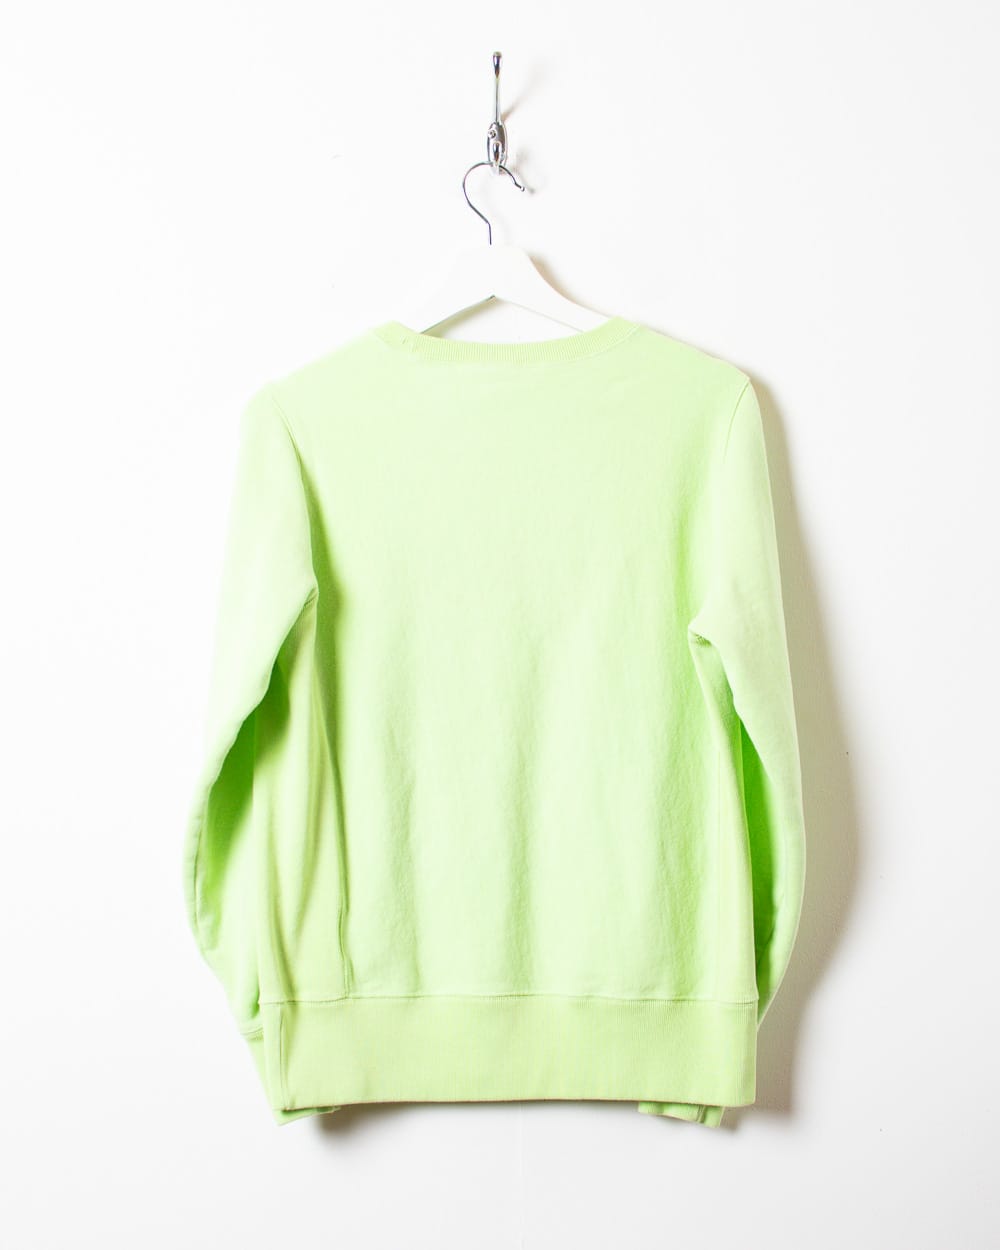 Green Champion Sweatshirt - Small